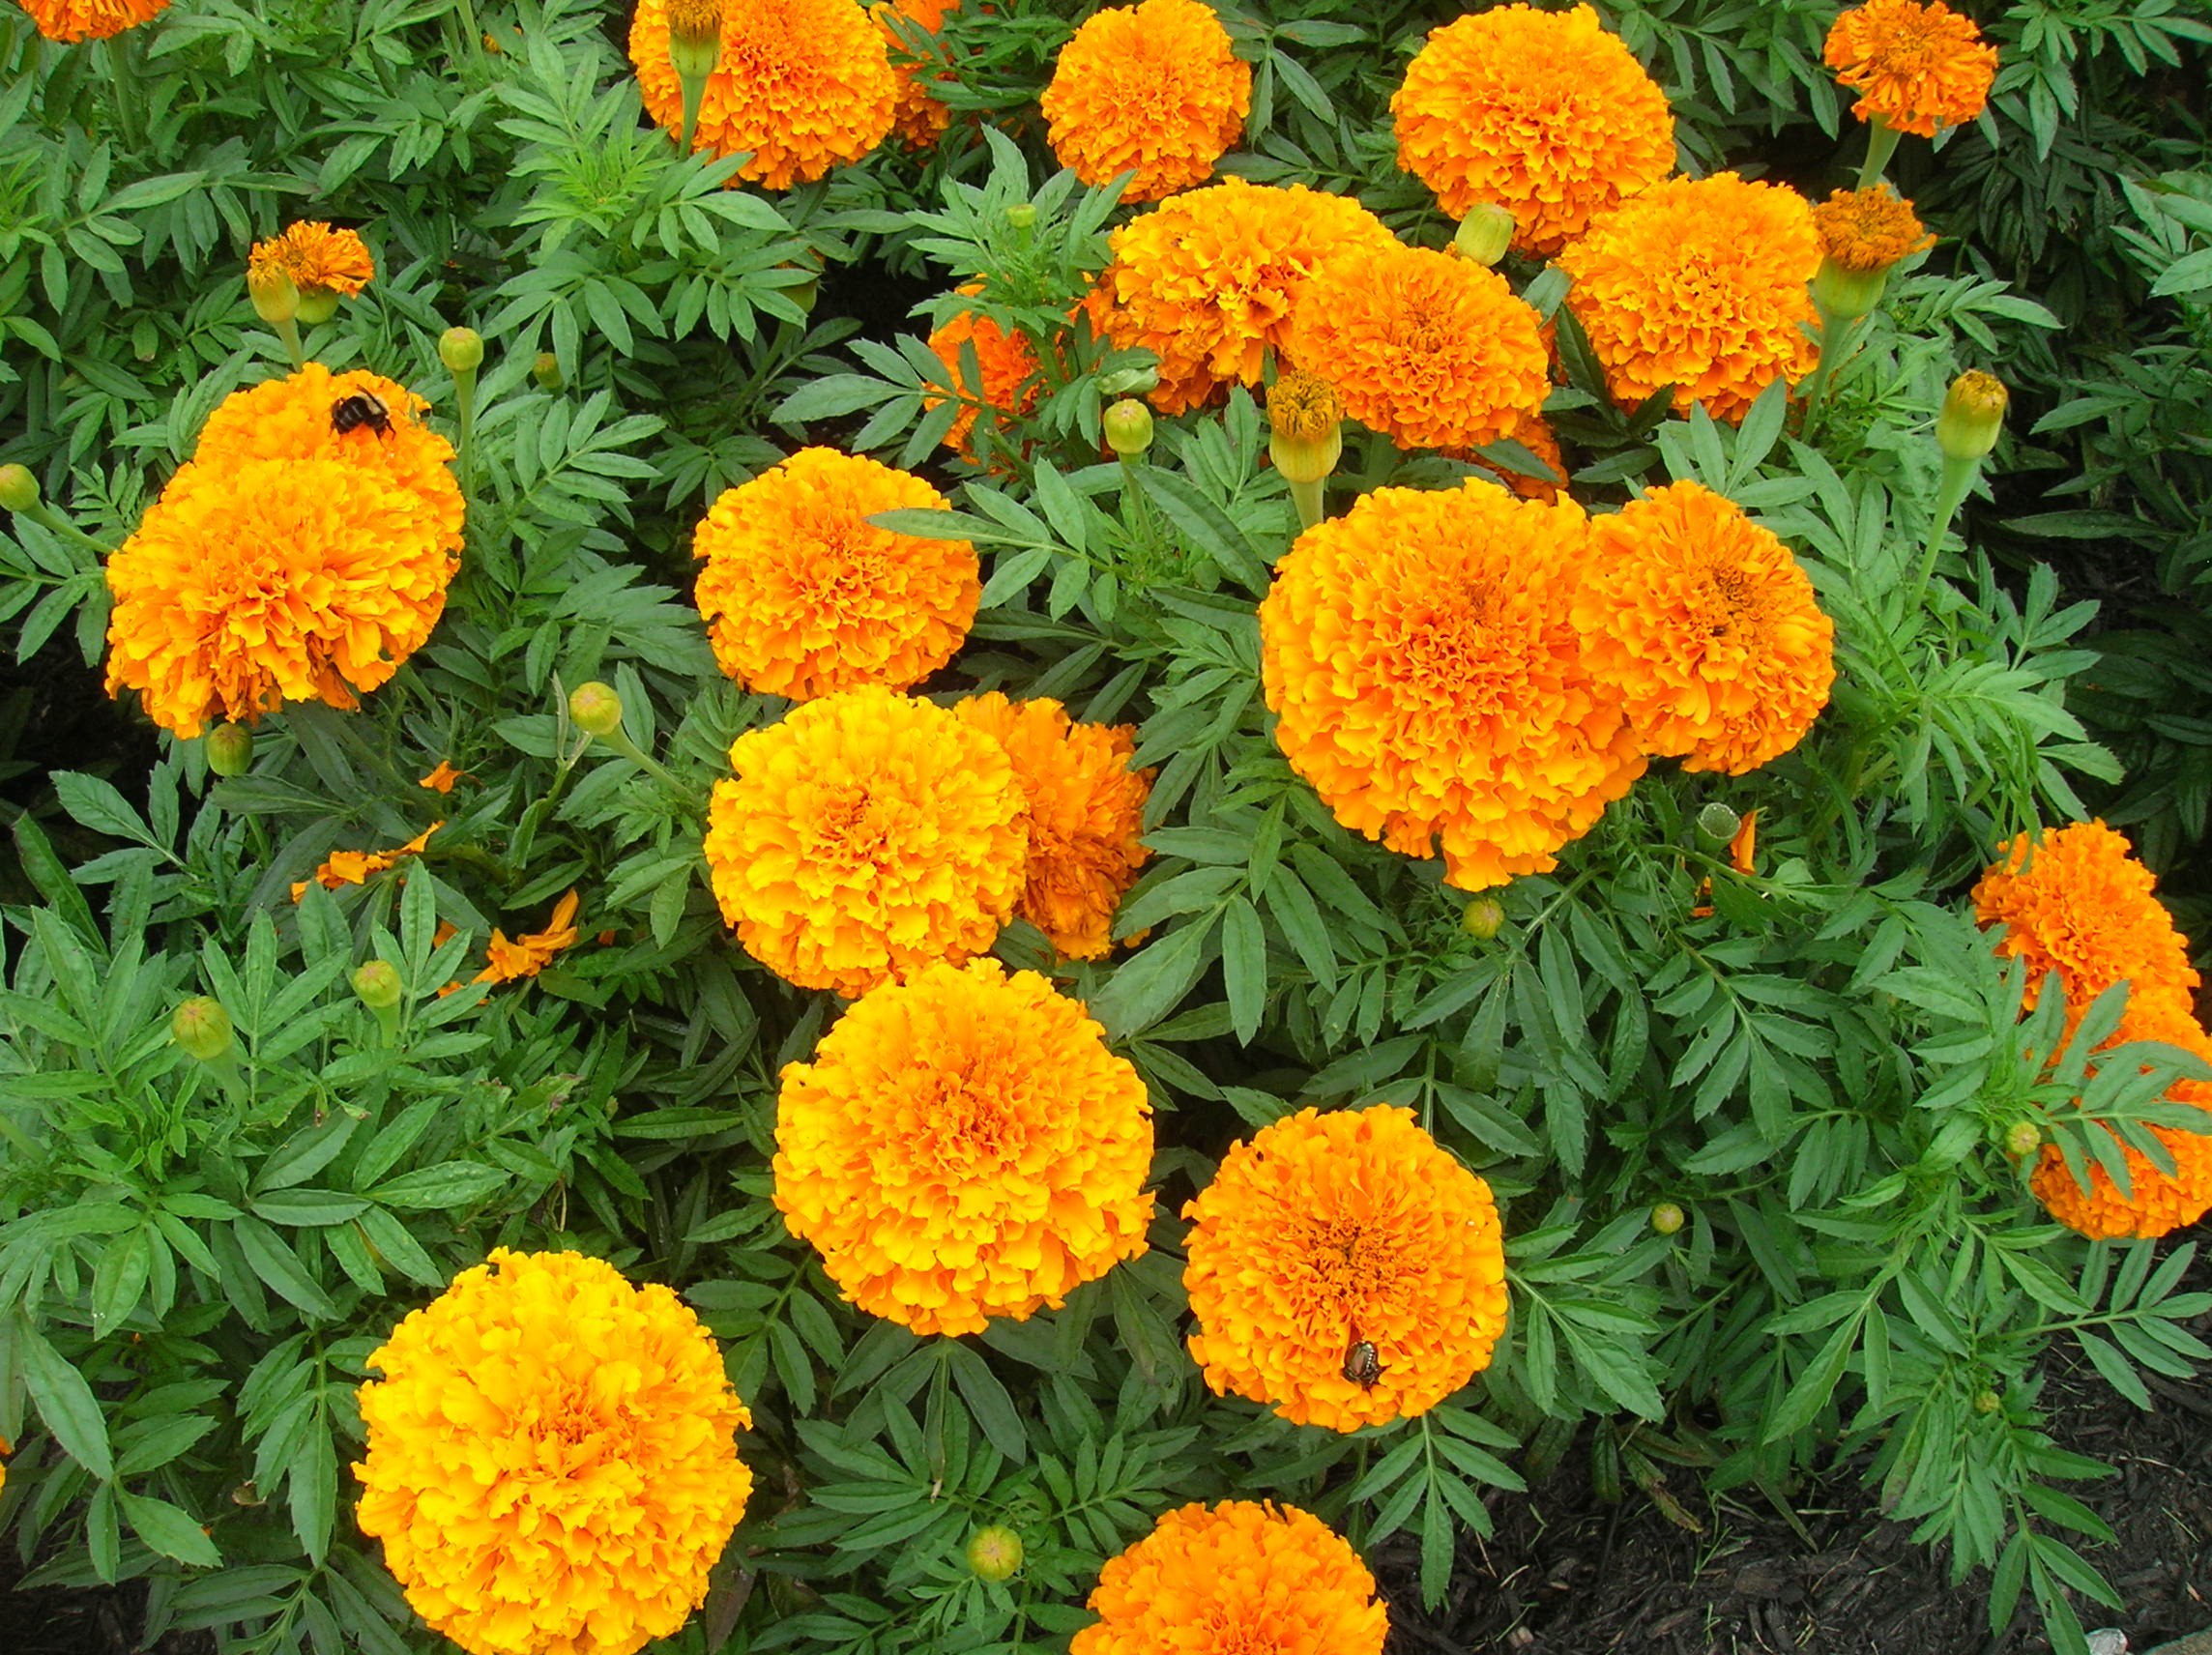 Marigolds downtown plant.jpg